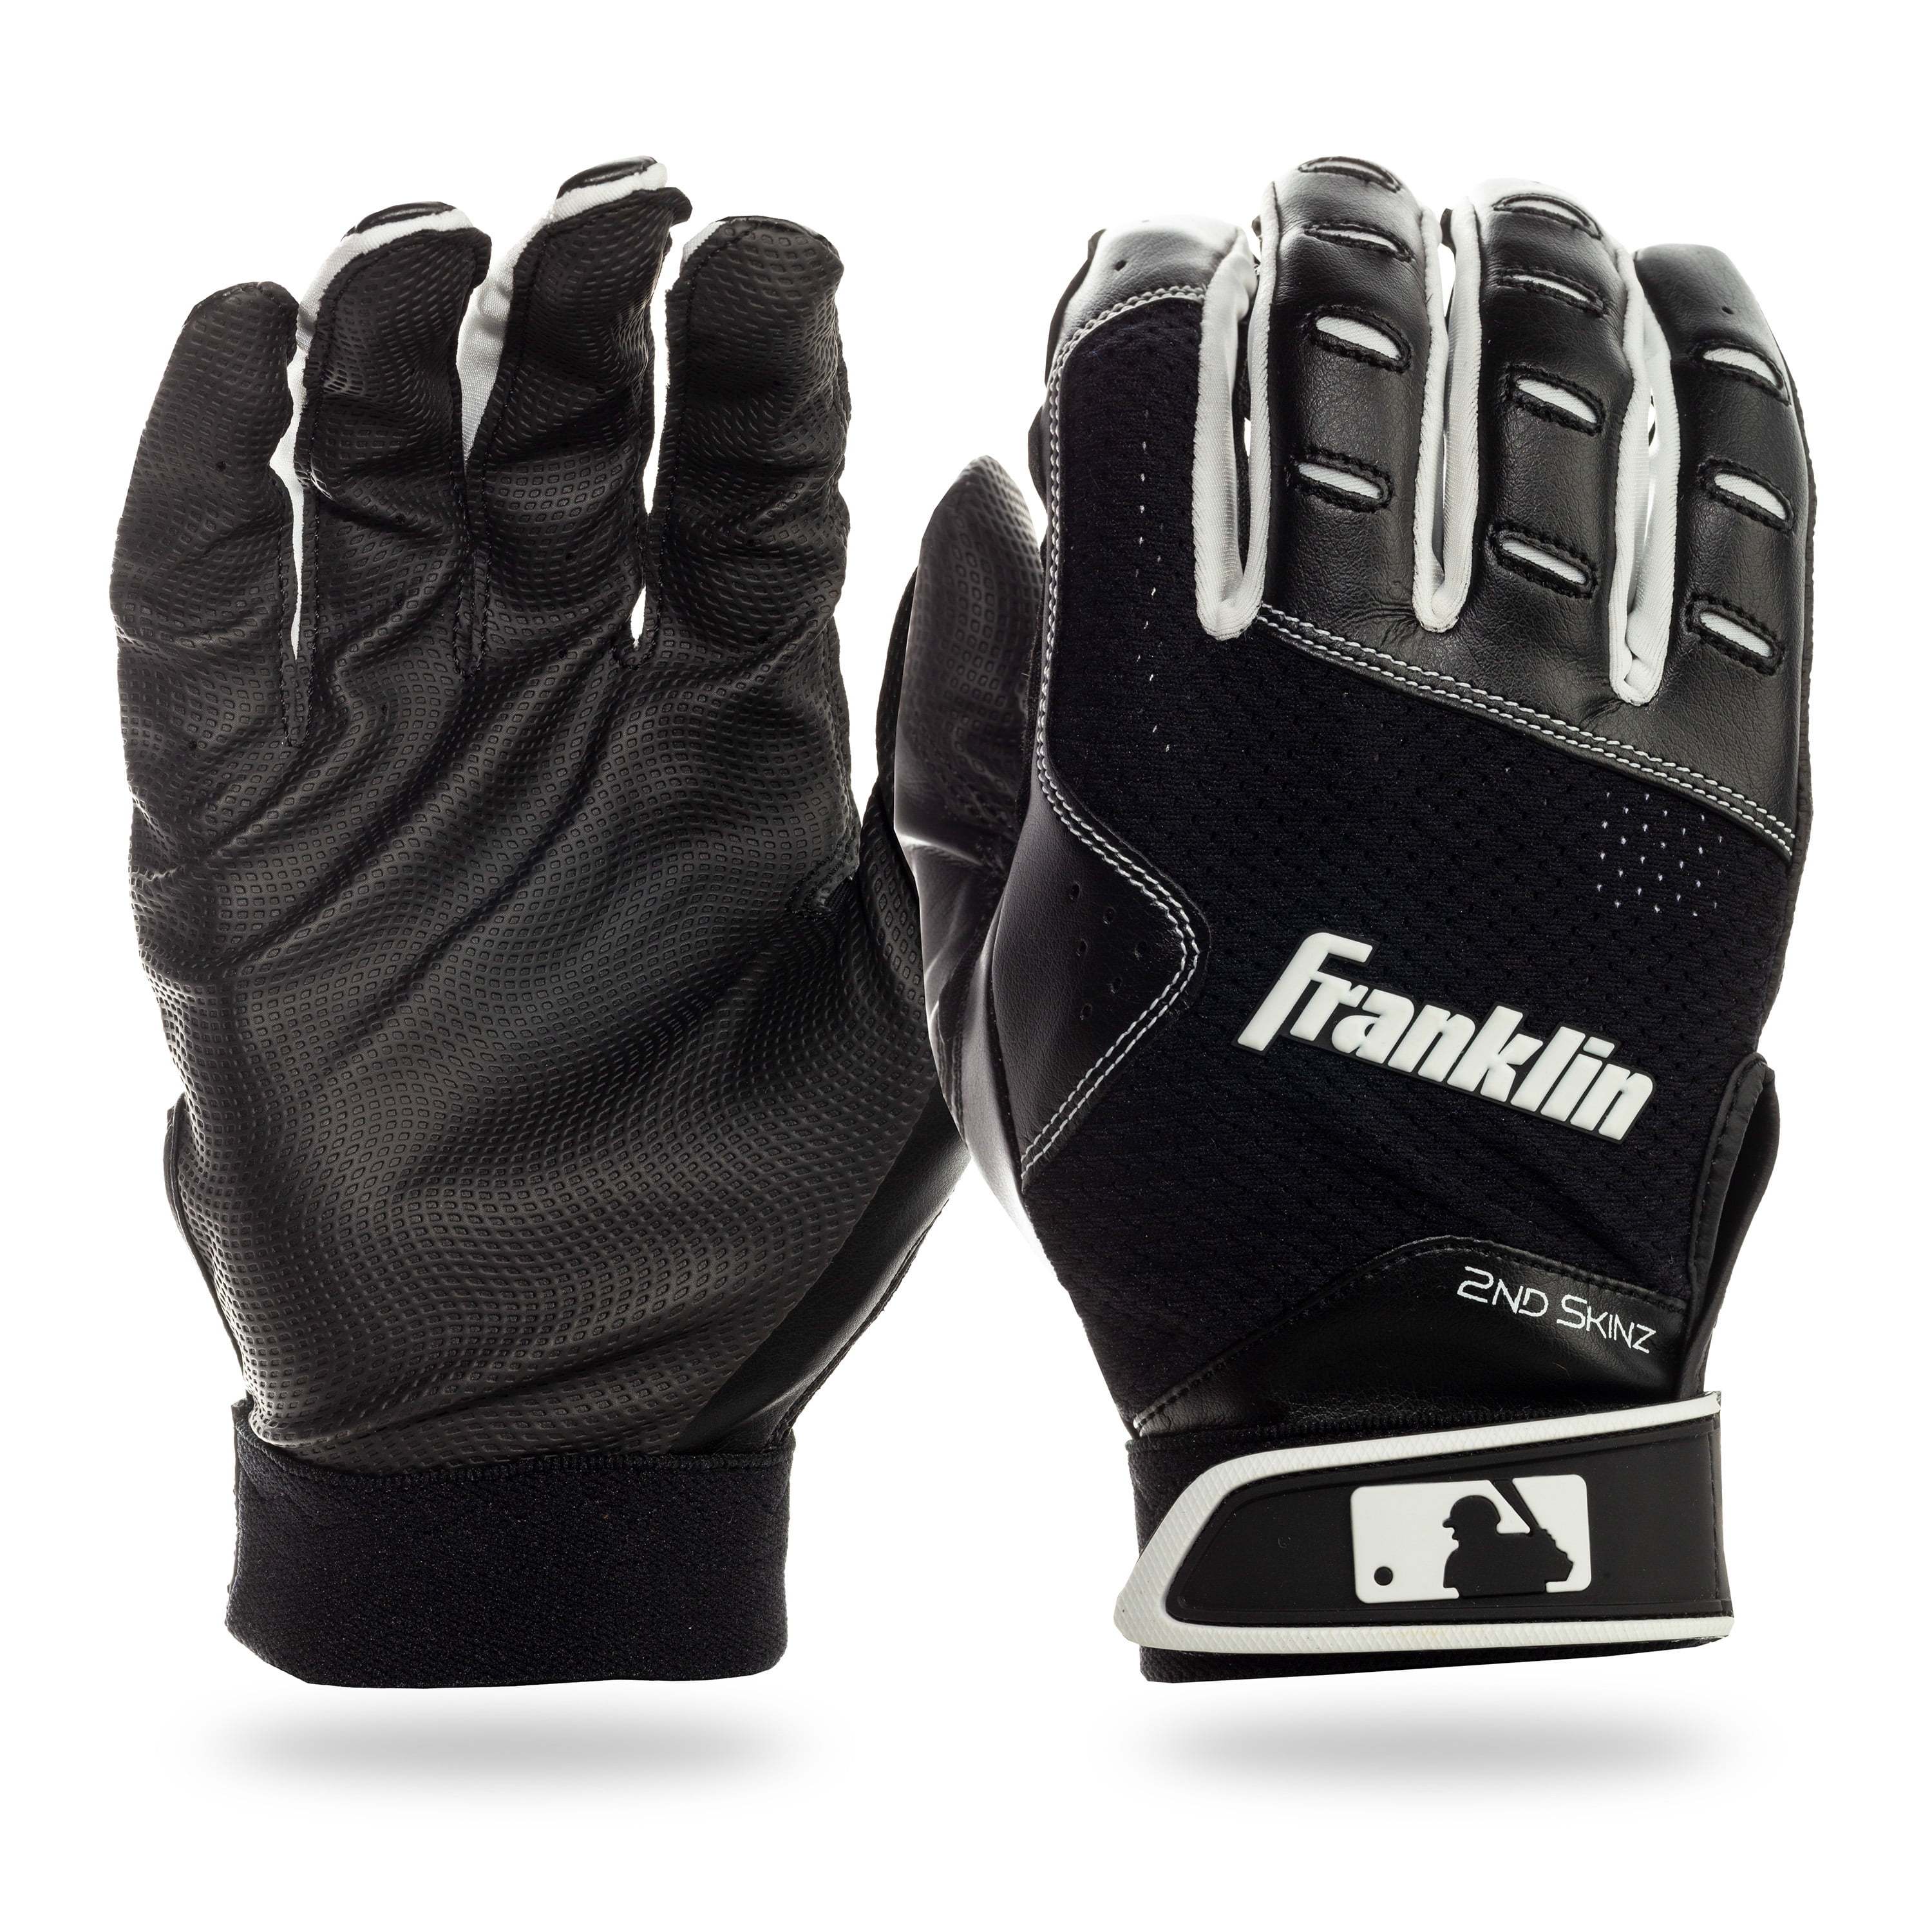 Franklin Sports 2nd Skinz XT Adult Batting Gloves, Small - Black/Gray/White